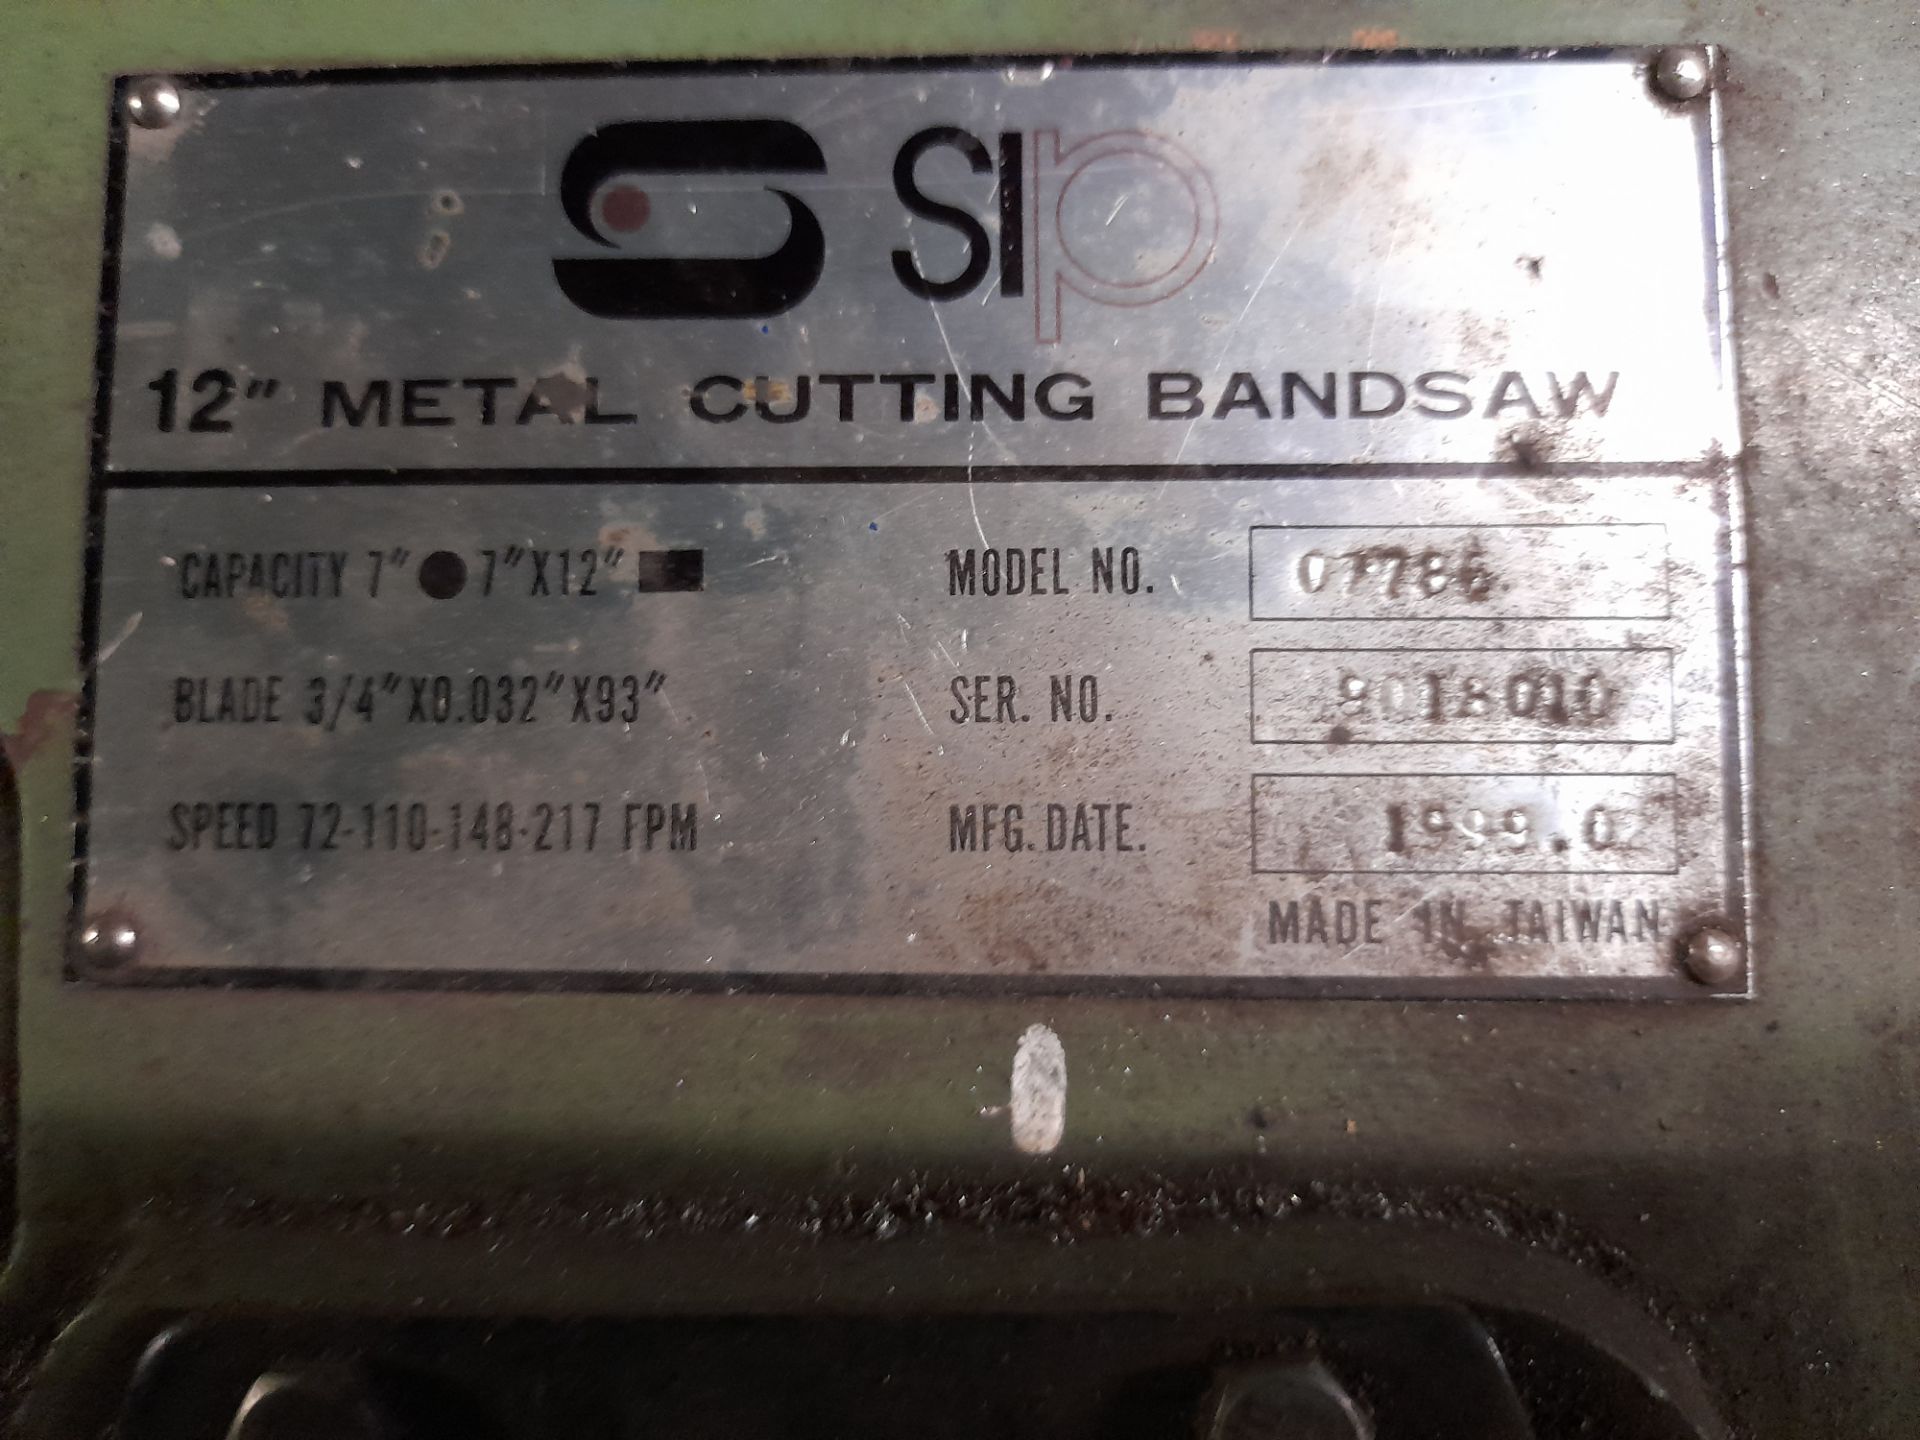 Sip 12" Model 07786 horizontal metal cutting bandsaw, s/n 9018010, year 1999, 240v - Image 3 of 3